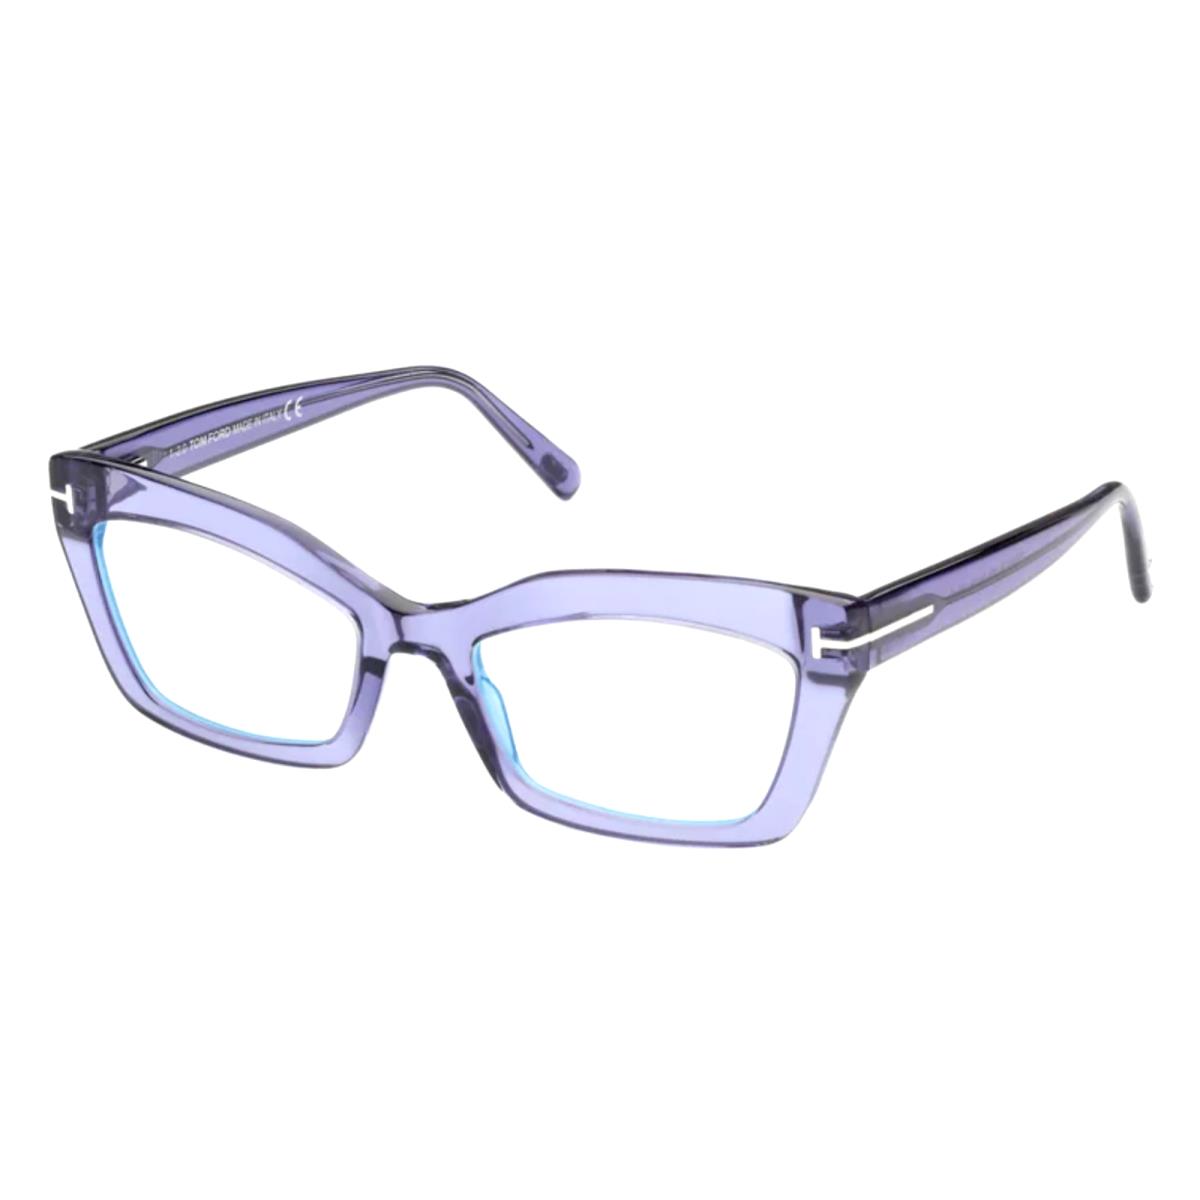 Tom Ford Blue Blocking Eyeglasses TF 5766-B 078 54-19 Lilac Cat Eyes Frames - Frame: , Lens: Clear Blue Block Lenses